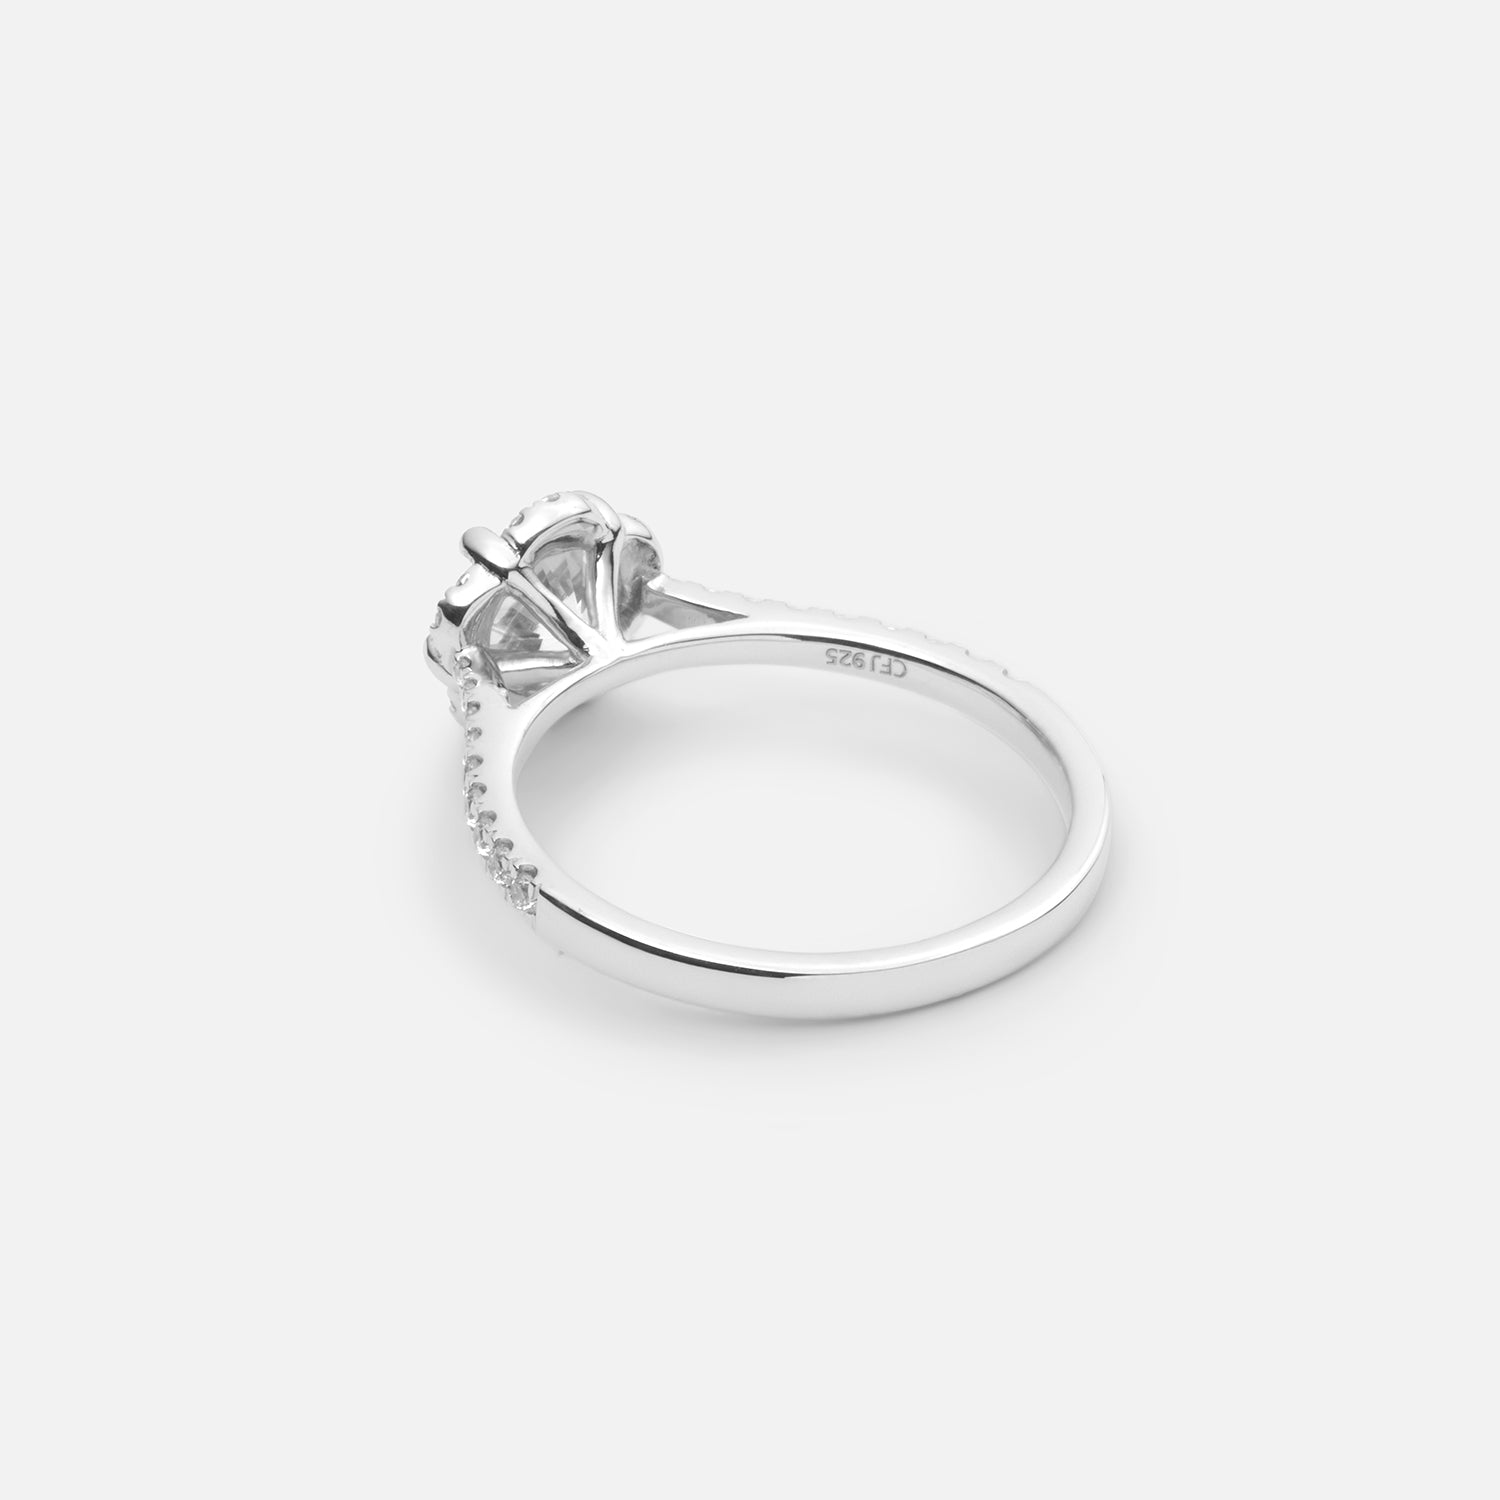 1ct Brilliant Cut Flower Halo Diamond Ring